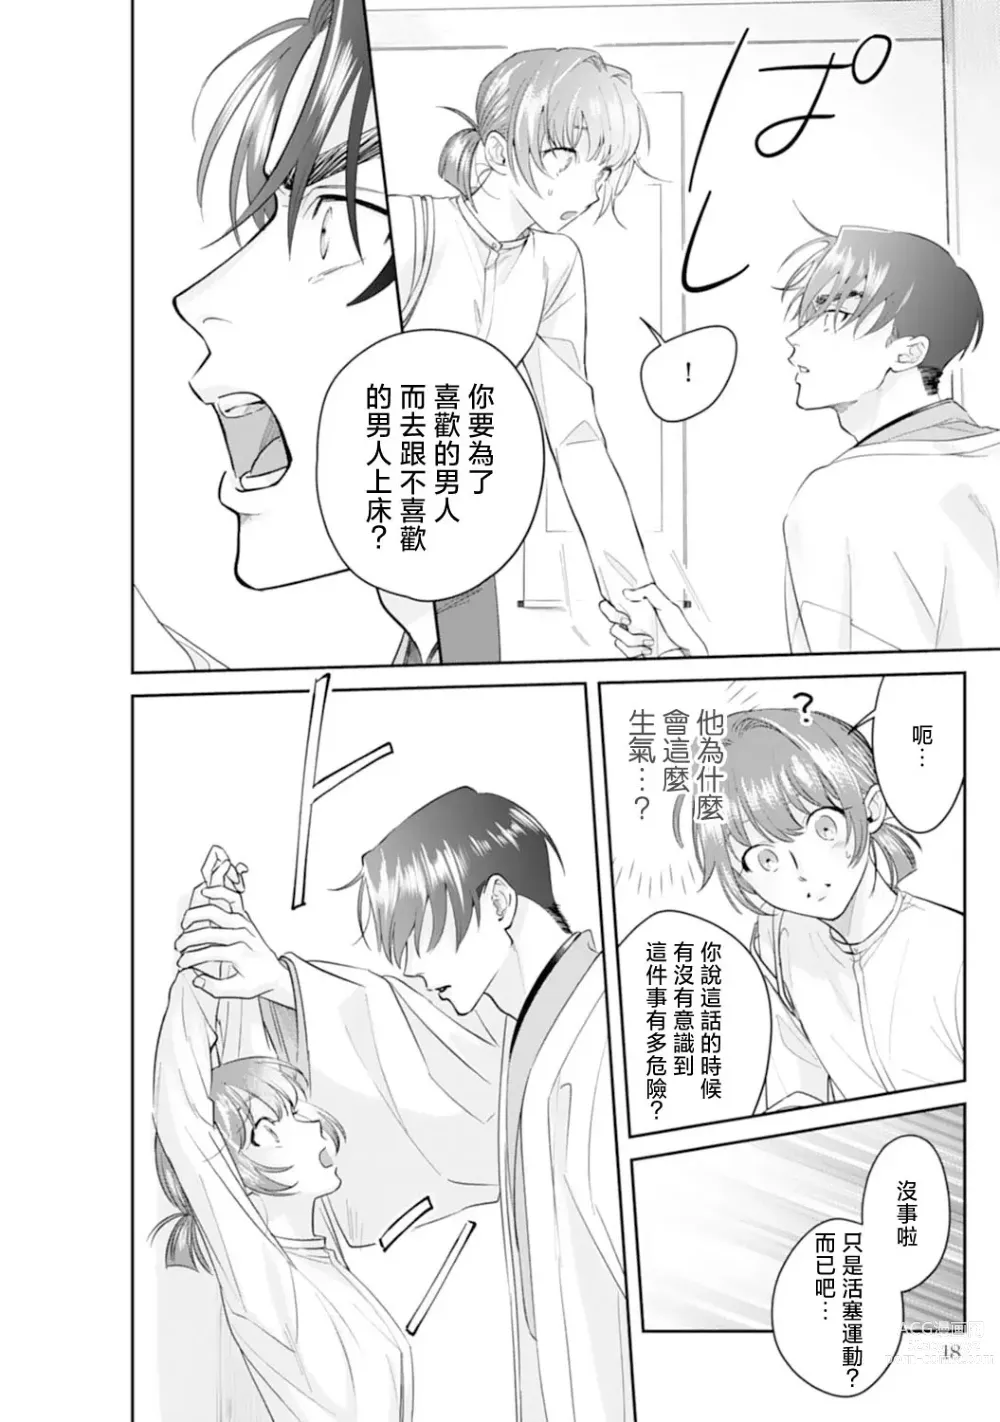 Page 21 of manga 浅叶老师专一的纯爱 1-2